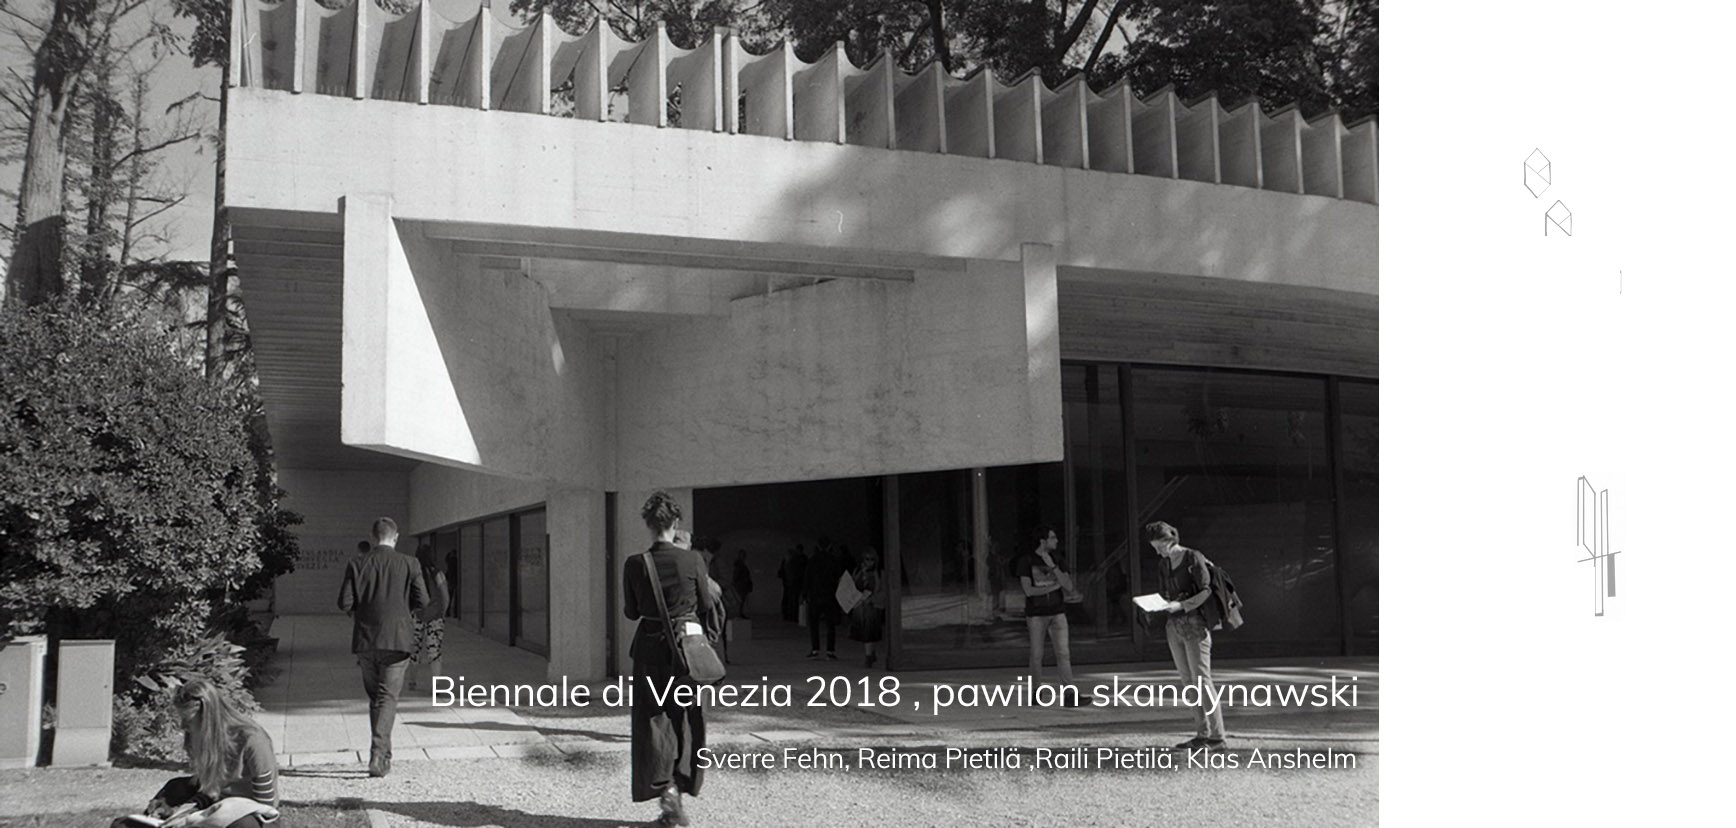 Biennale di Venezia 2018 pawilon skandynawski